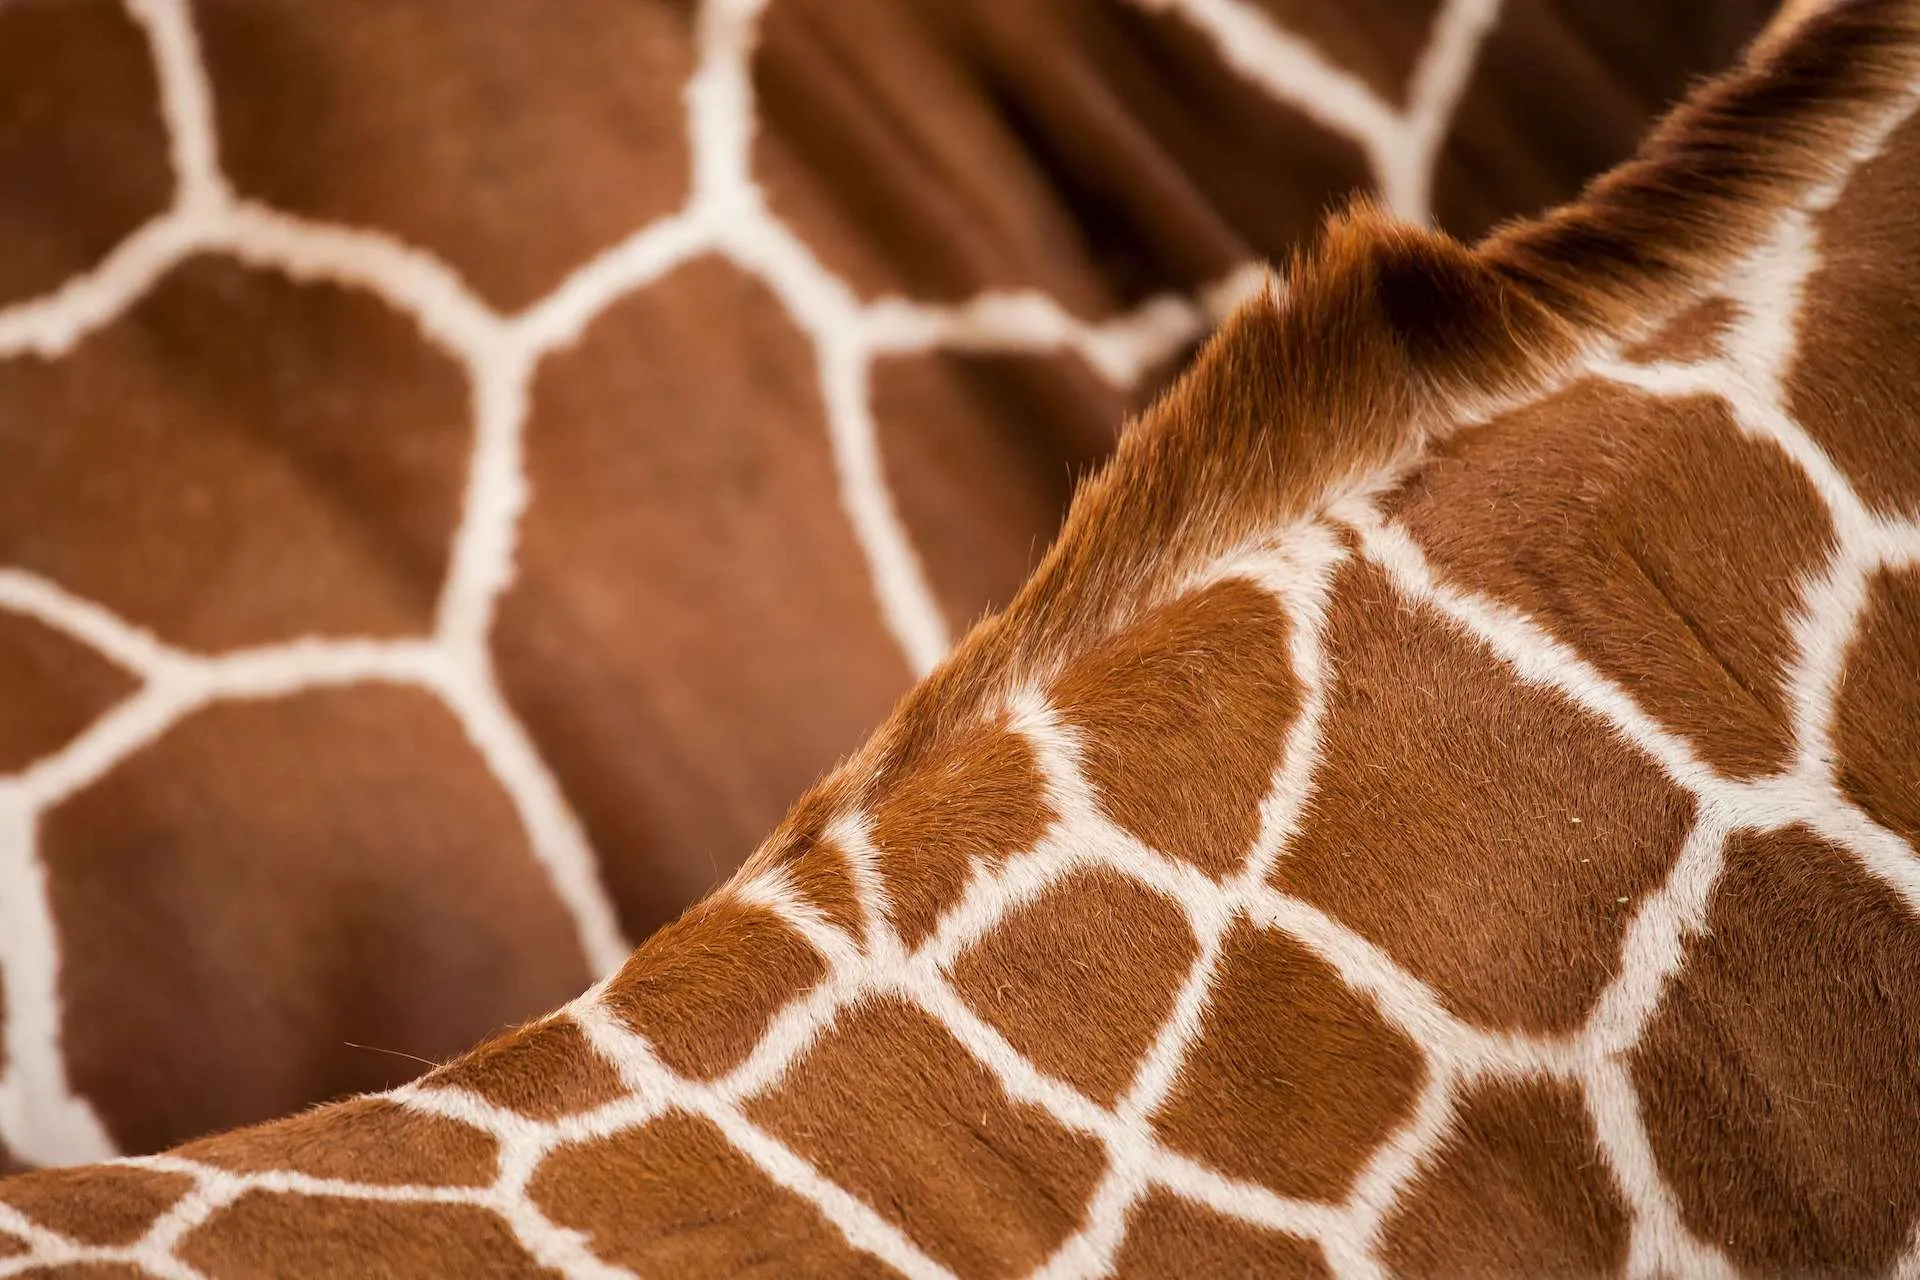 The pattern on a giraffe's skin